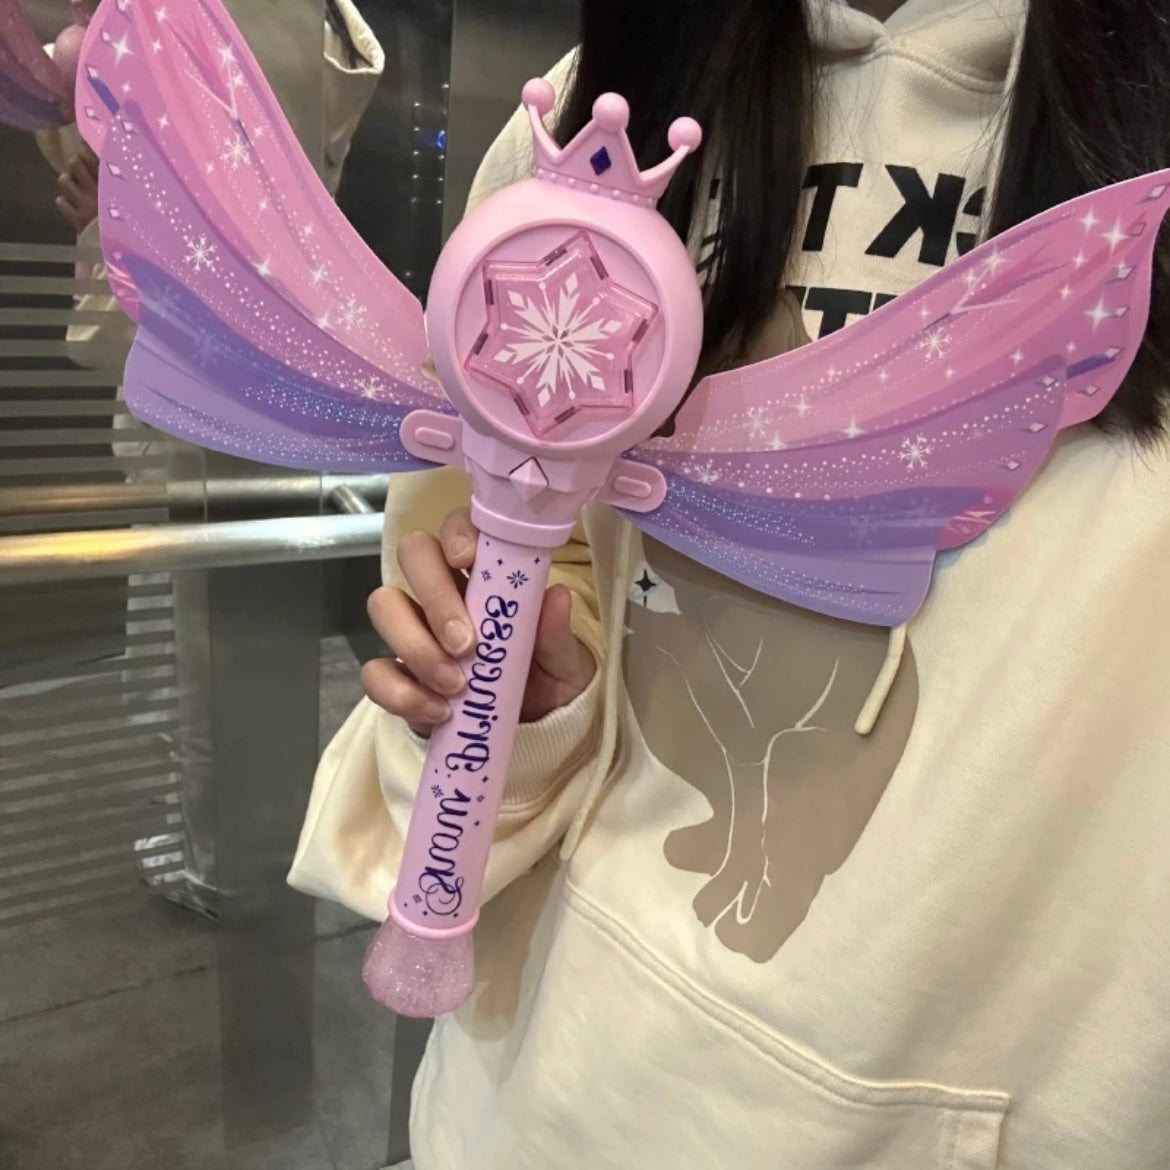 Fairy Magic Wand Pink Blue Bubble Machine Toy Couple Gift